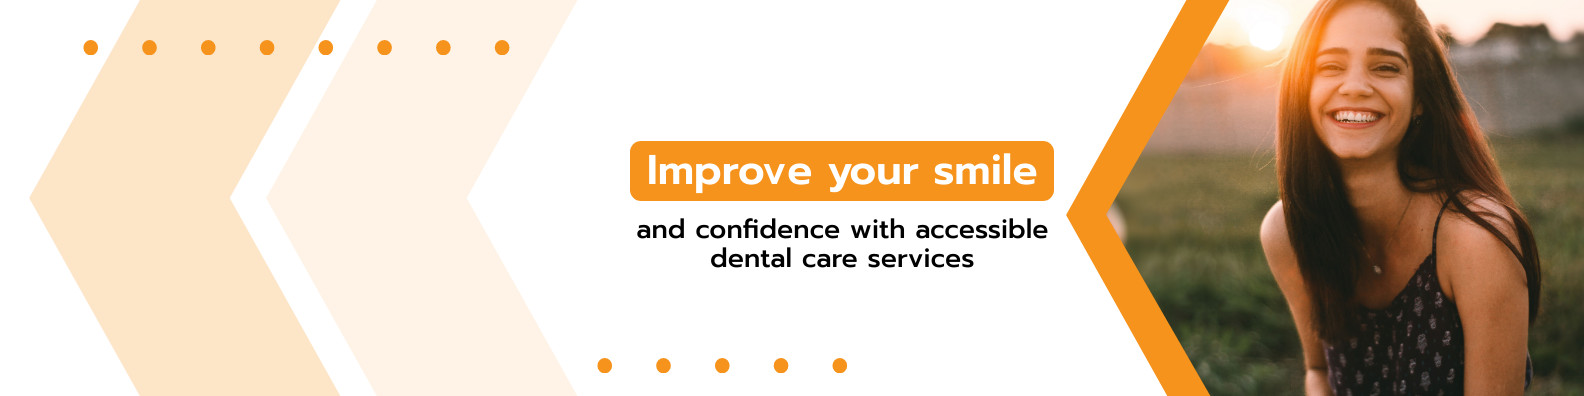 Improve Your Smile Dental Care Linkedin Profile BG